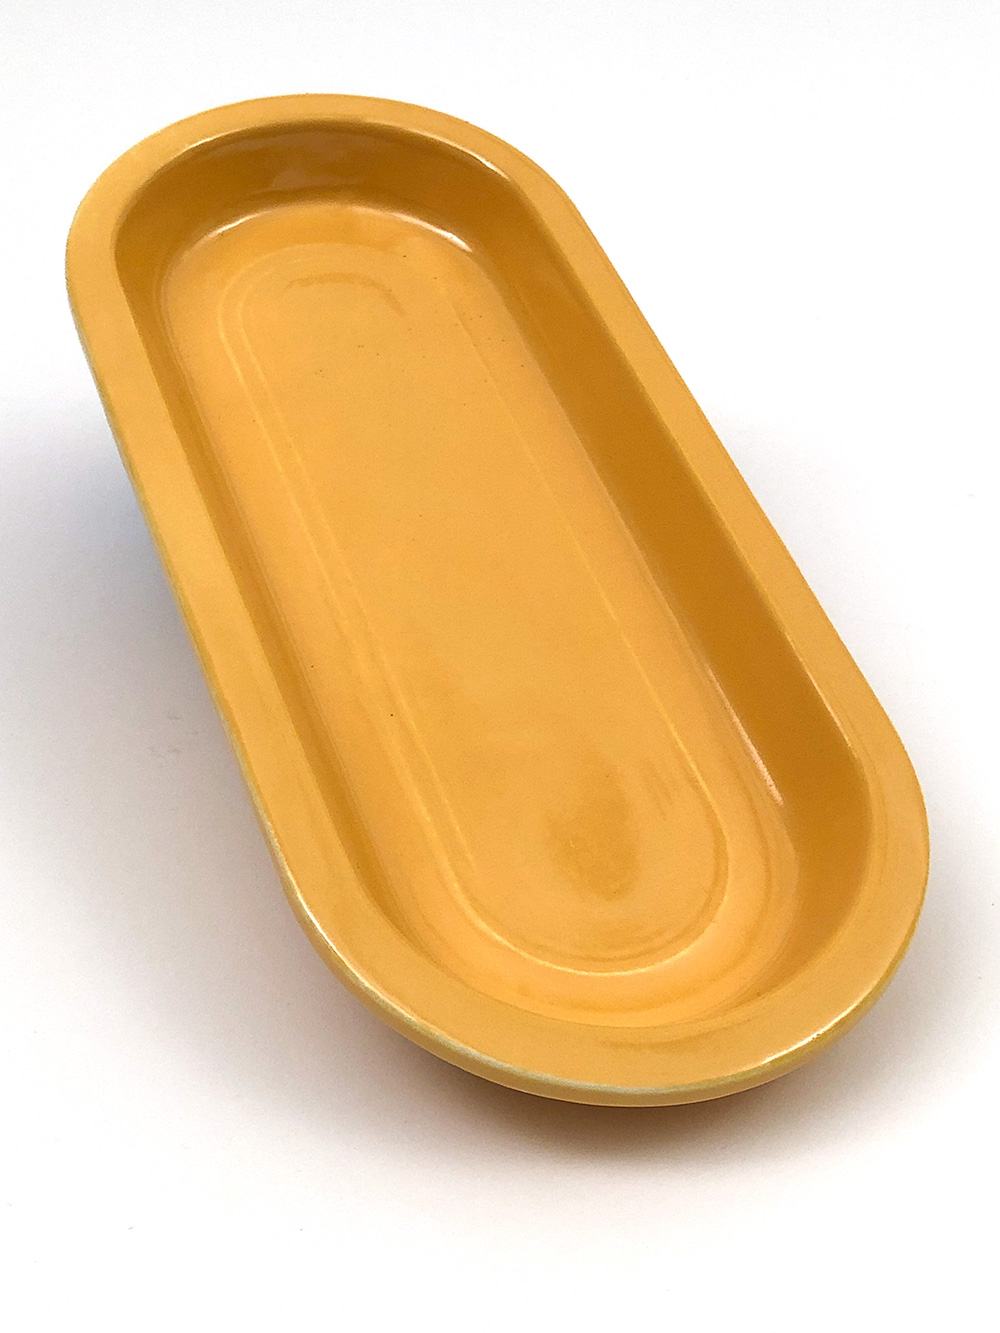 yellow fiesta utility tray